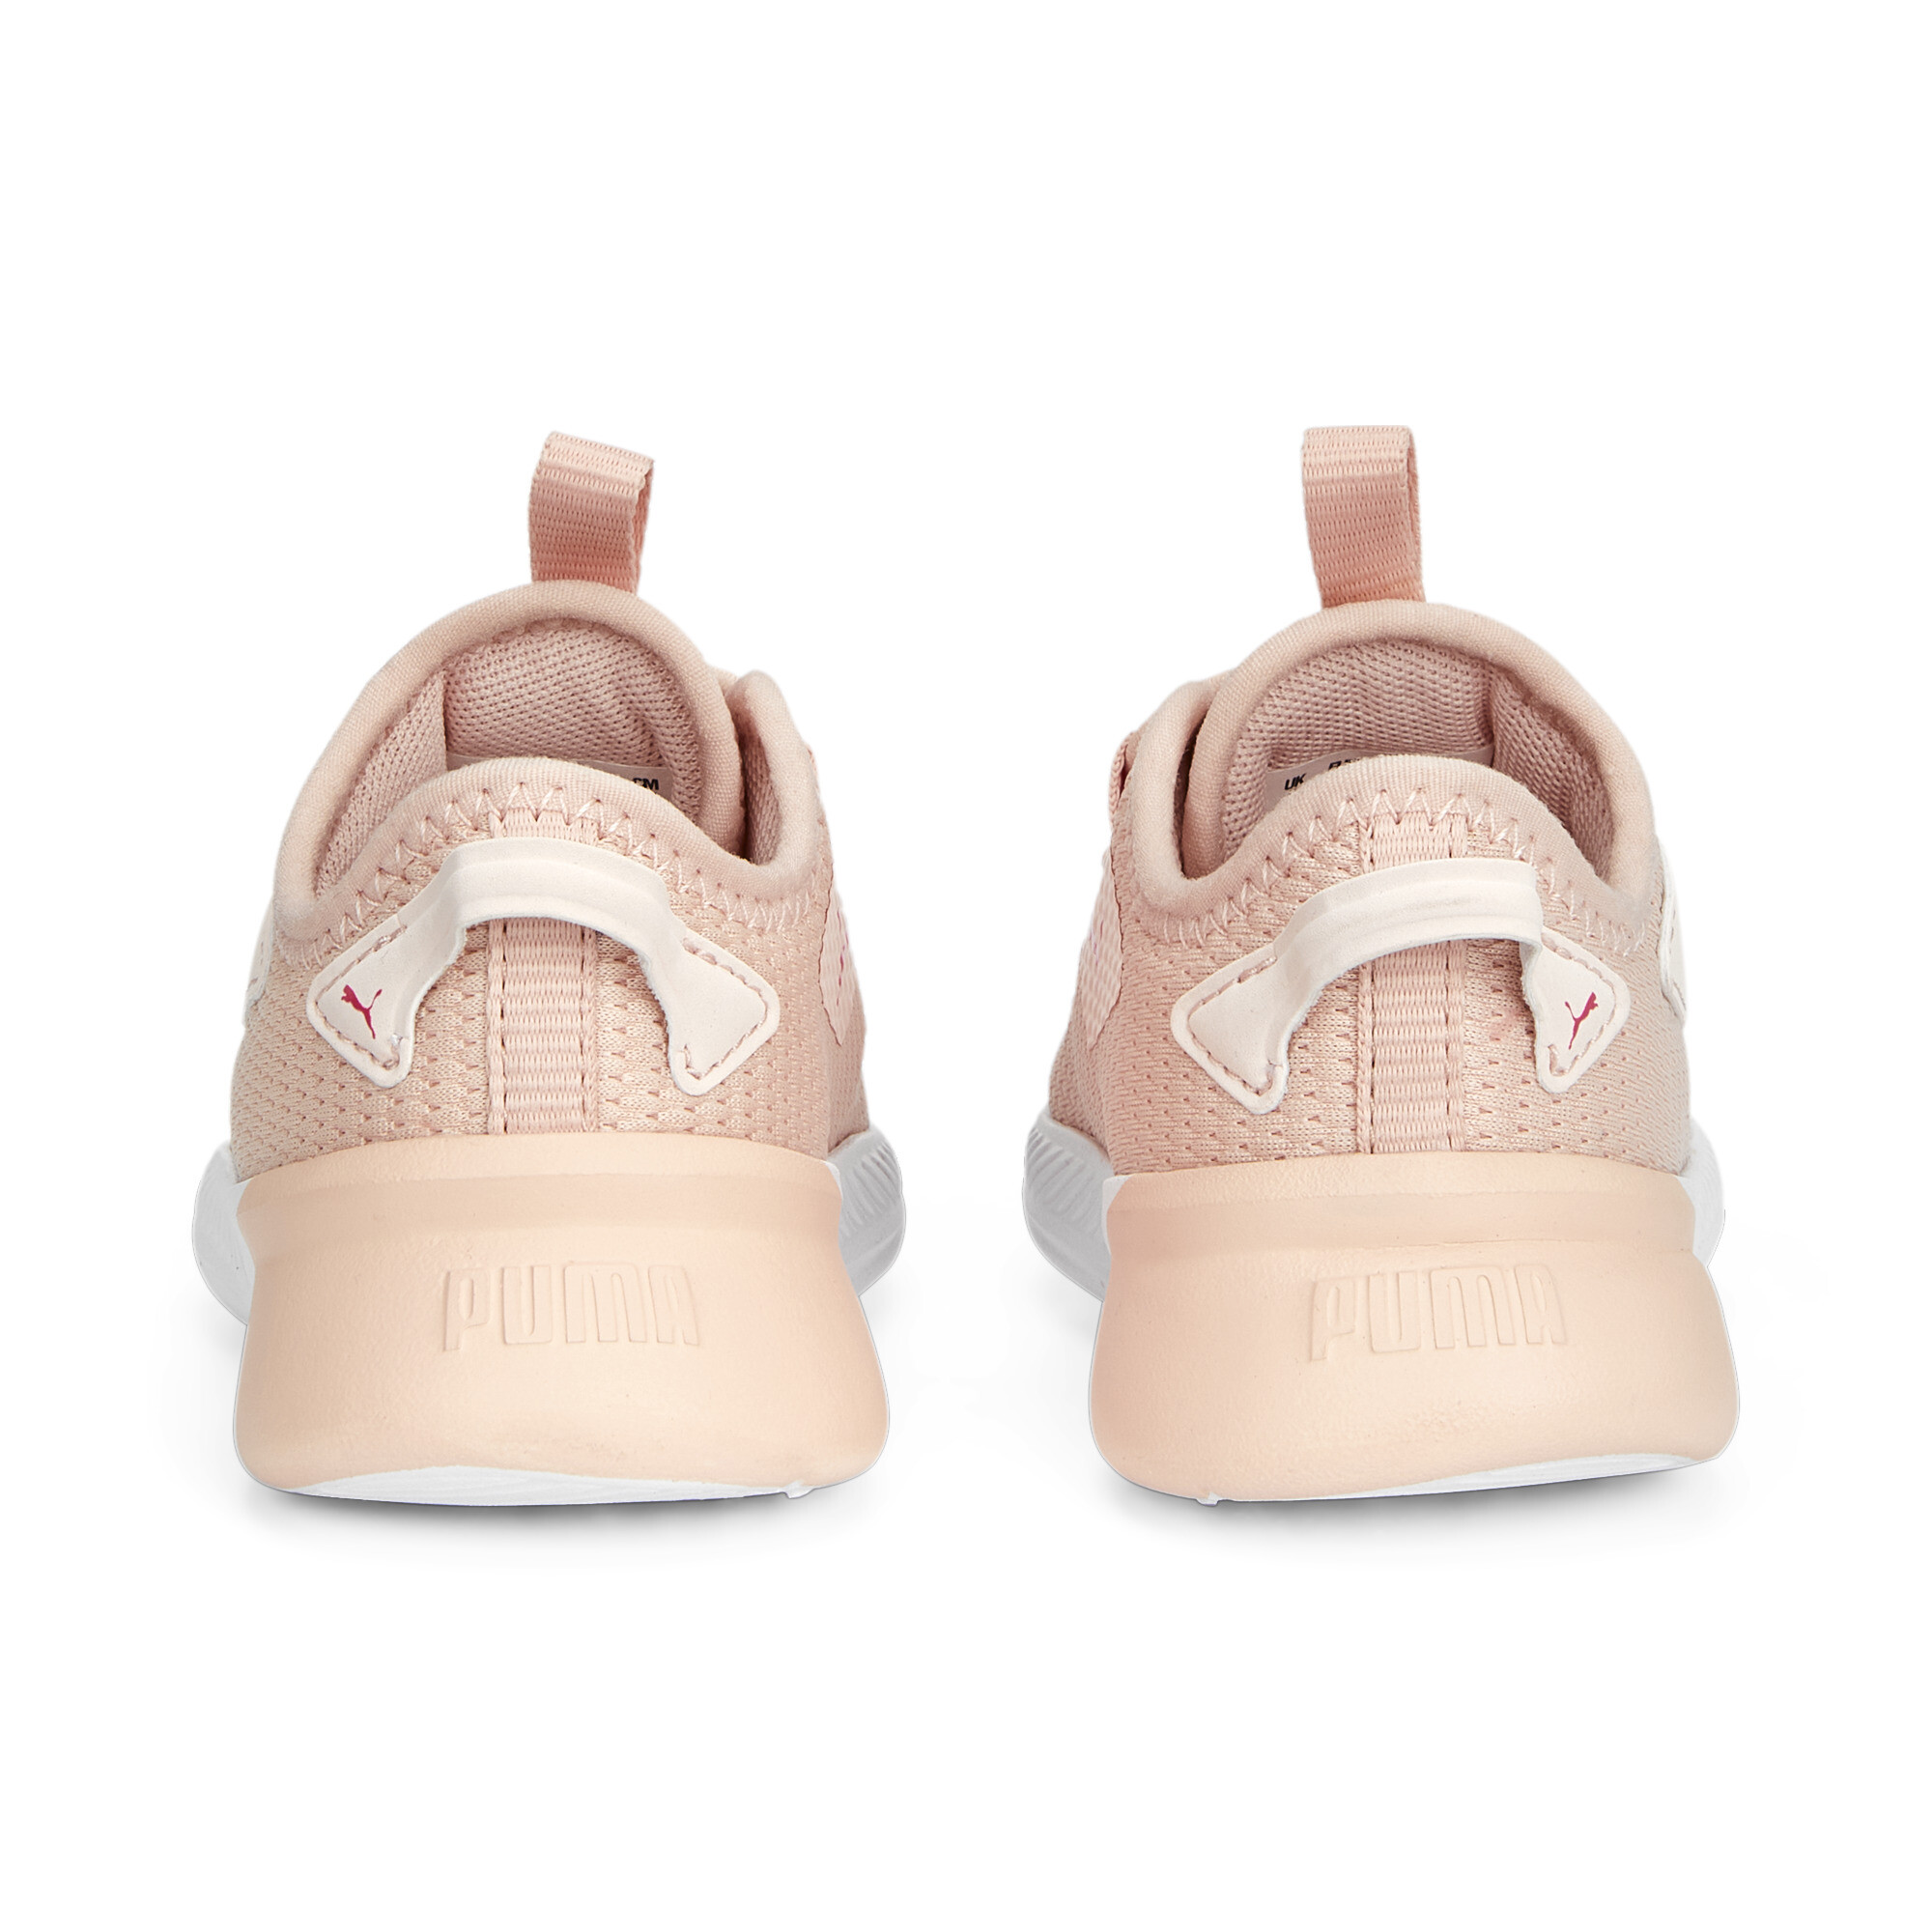 Puma Retaliate 2 AC Sneakers Babies, Pink, Size 20, Shoes